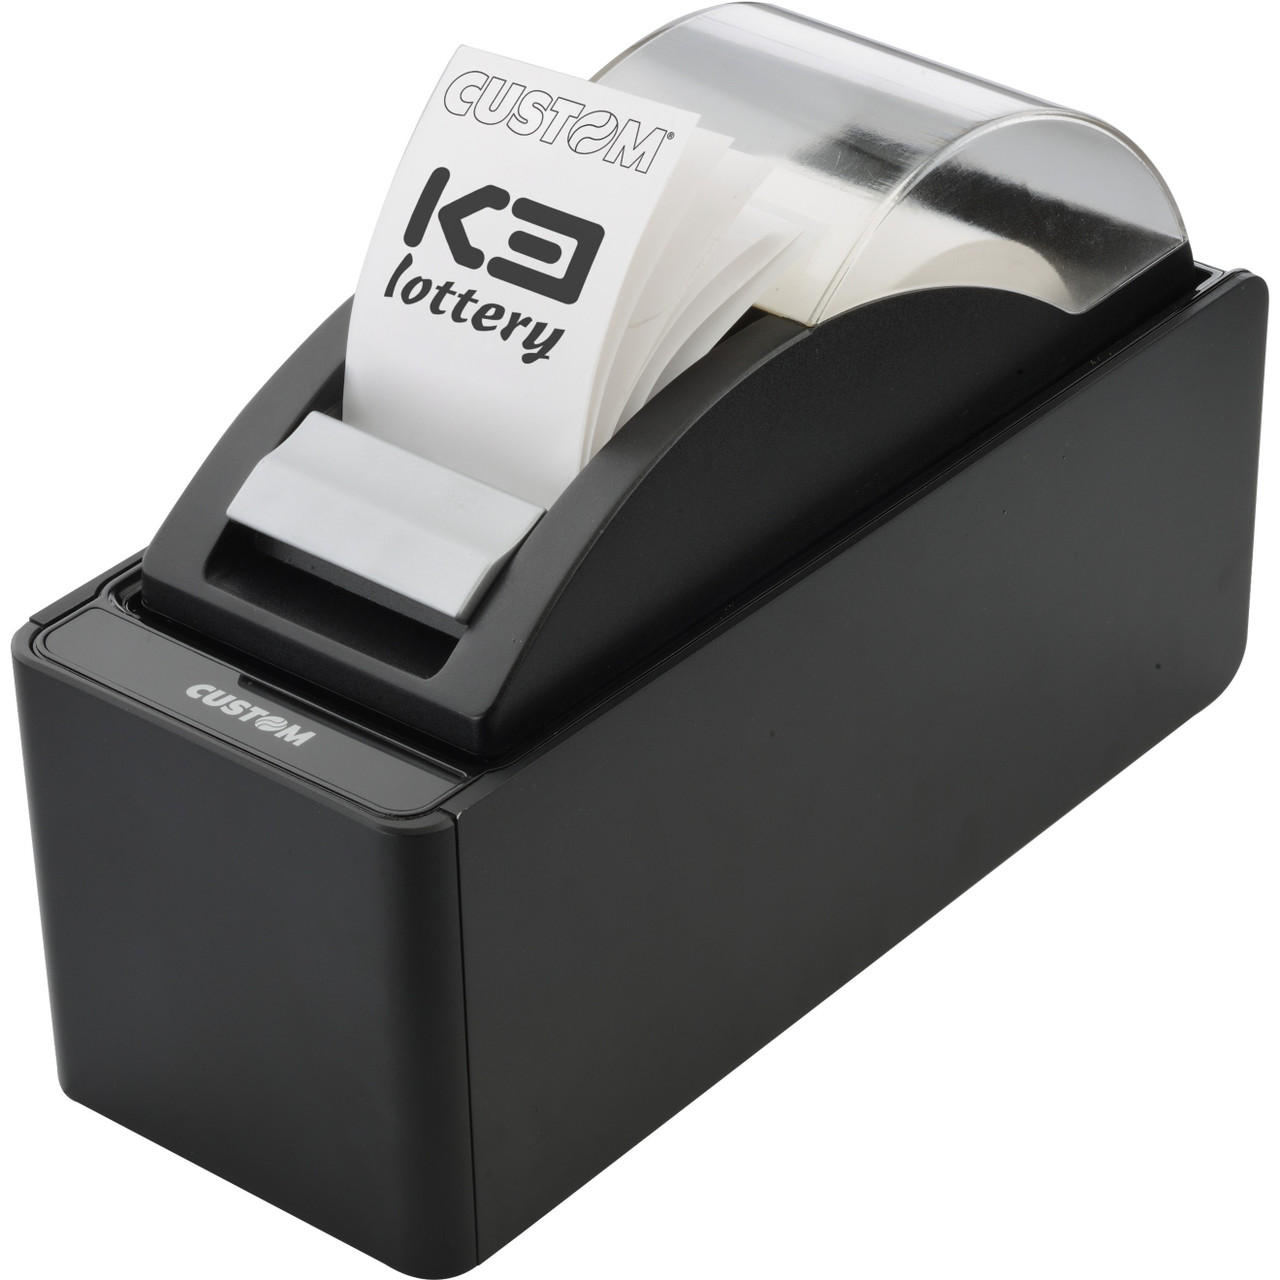 Custom K3 LOTTERY Desktop Direct Thermal Printer - Monochrome - Ticket Print - USB - Serial - 911HM030100233